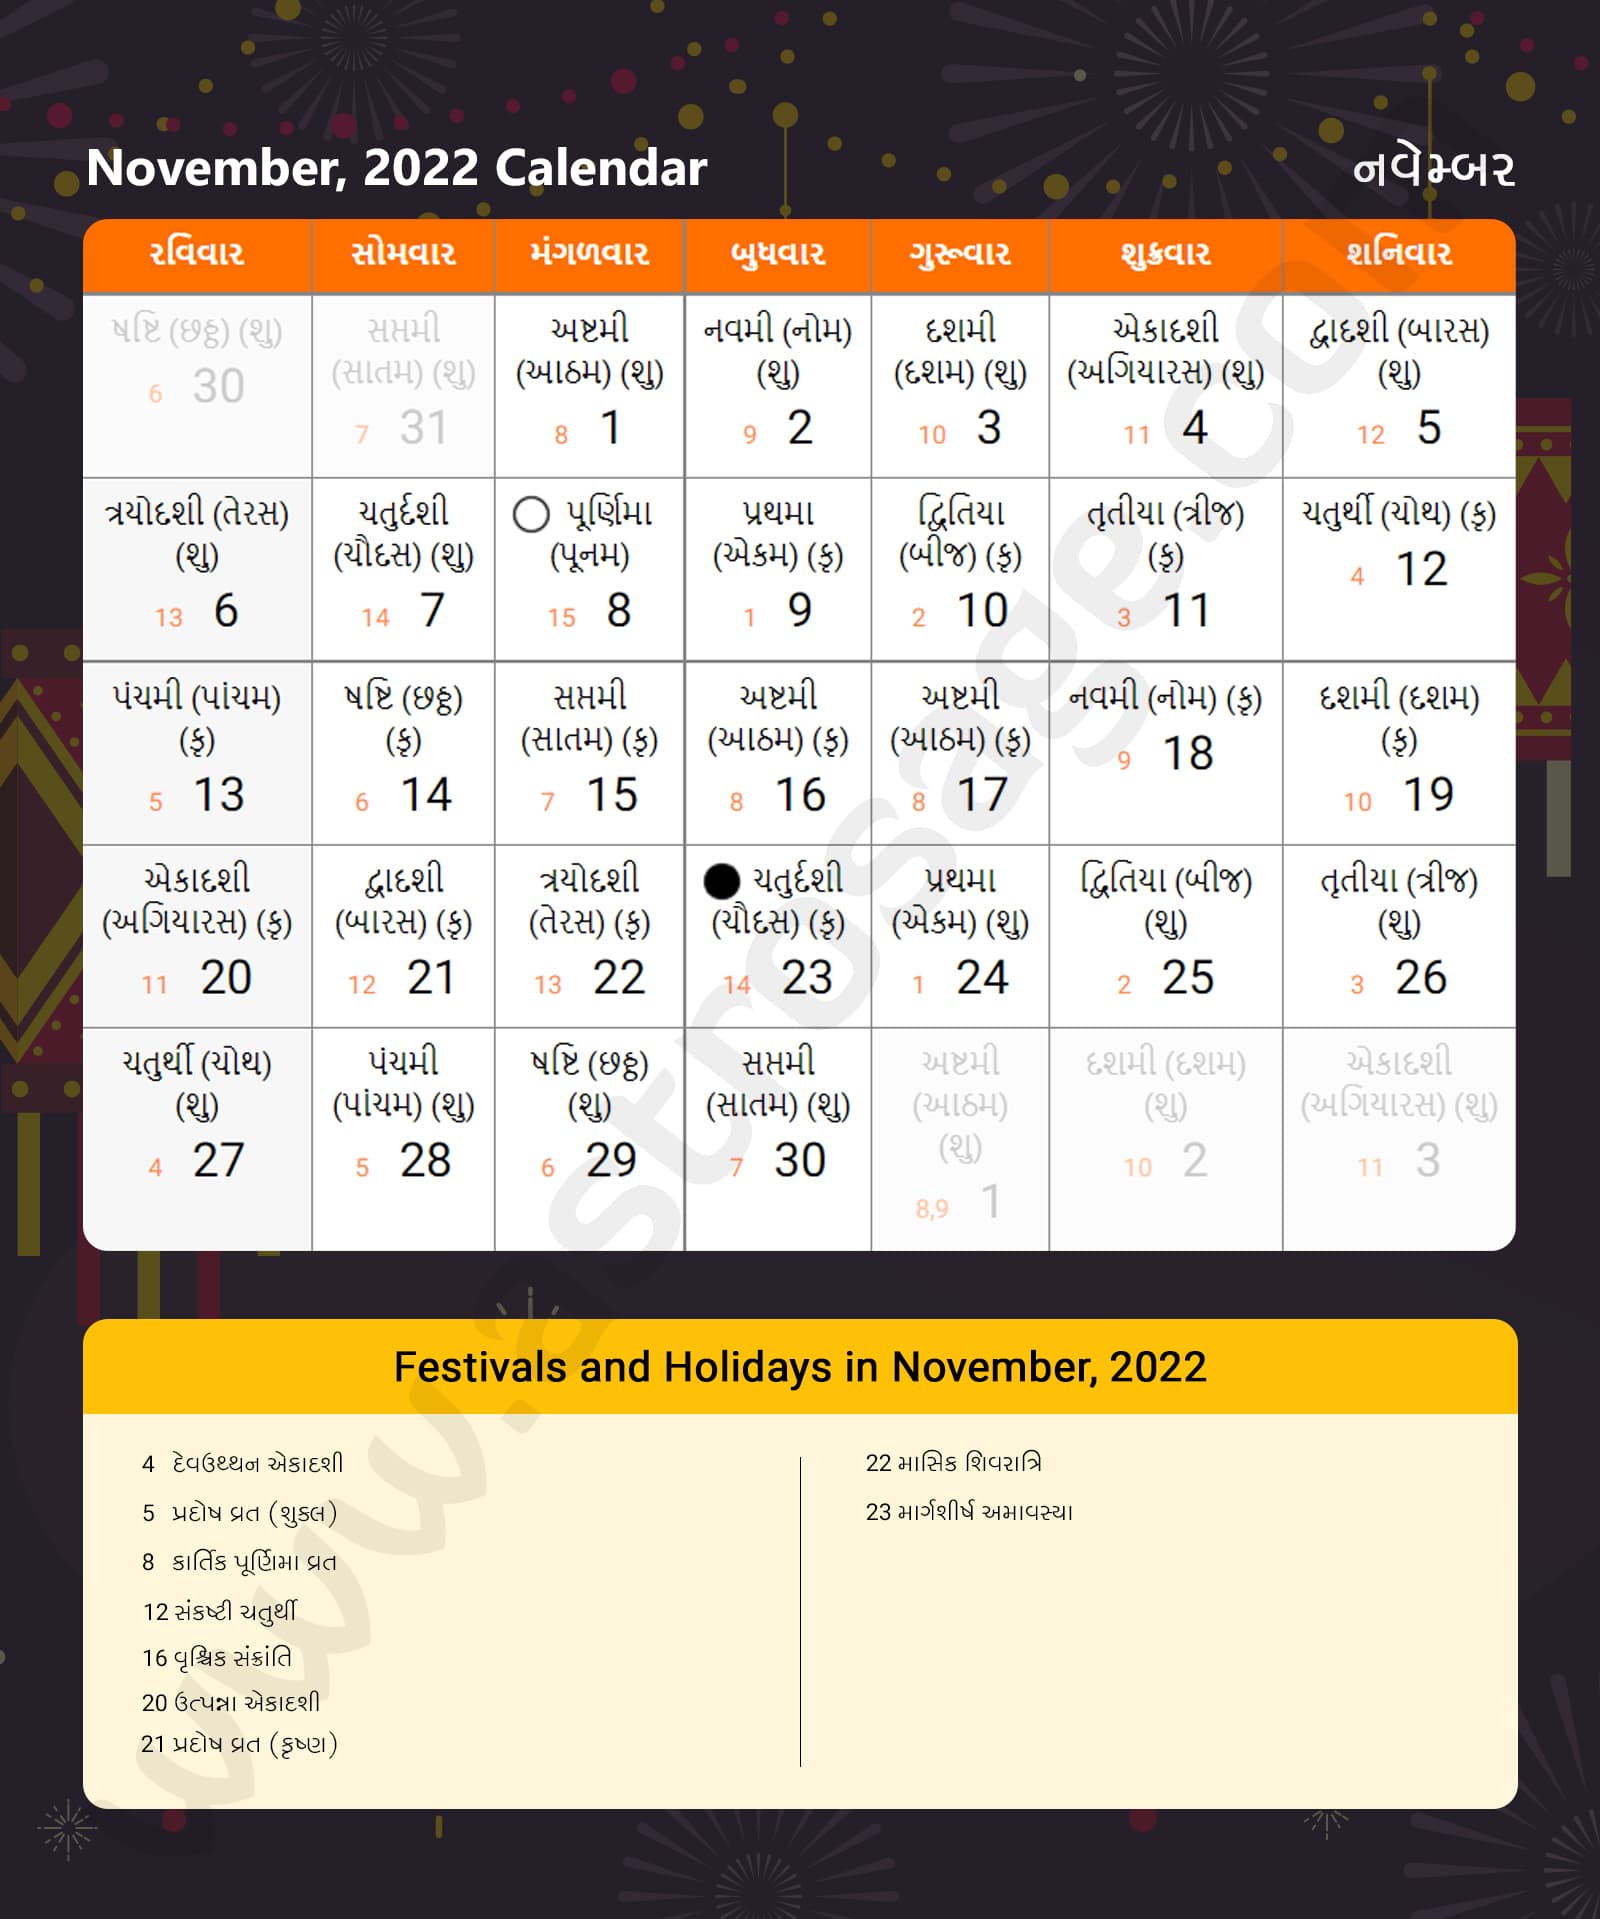 Hindu calendar 2022